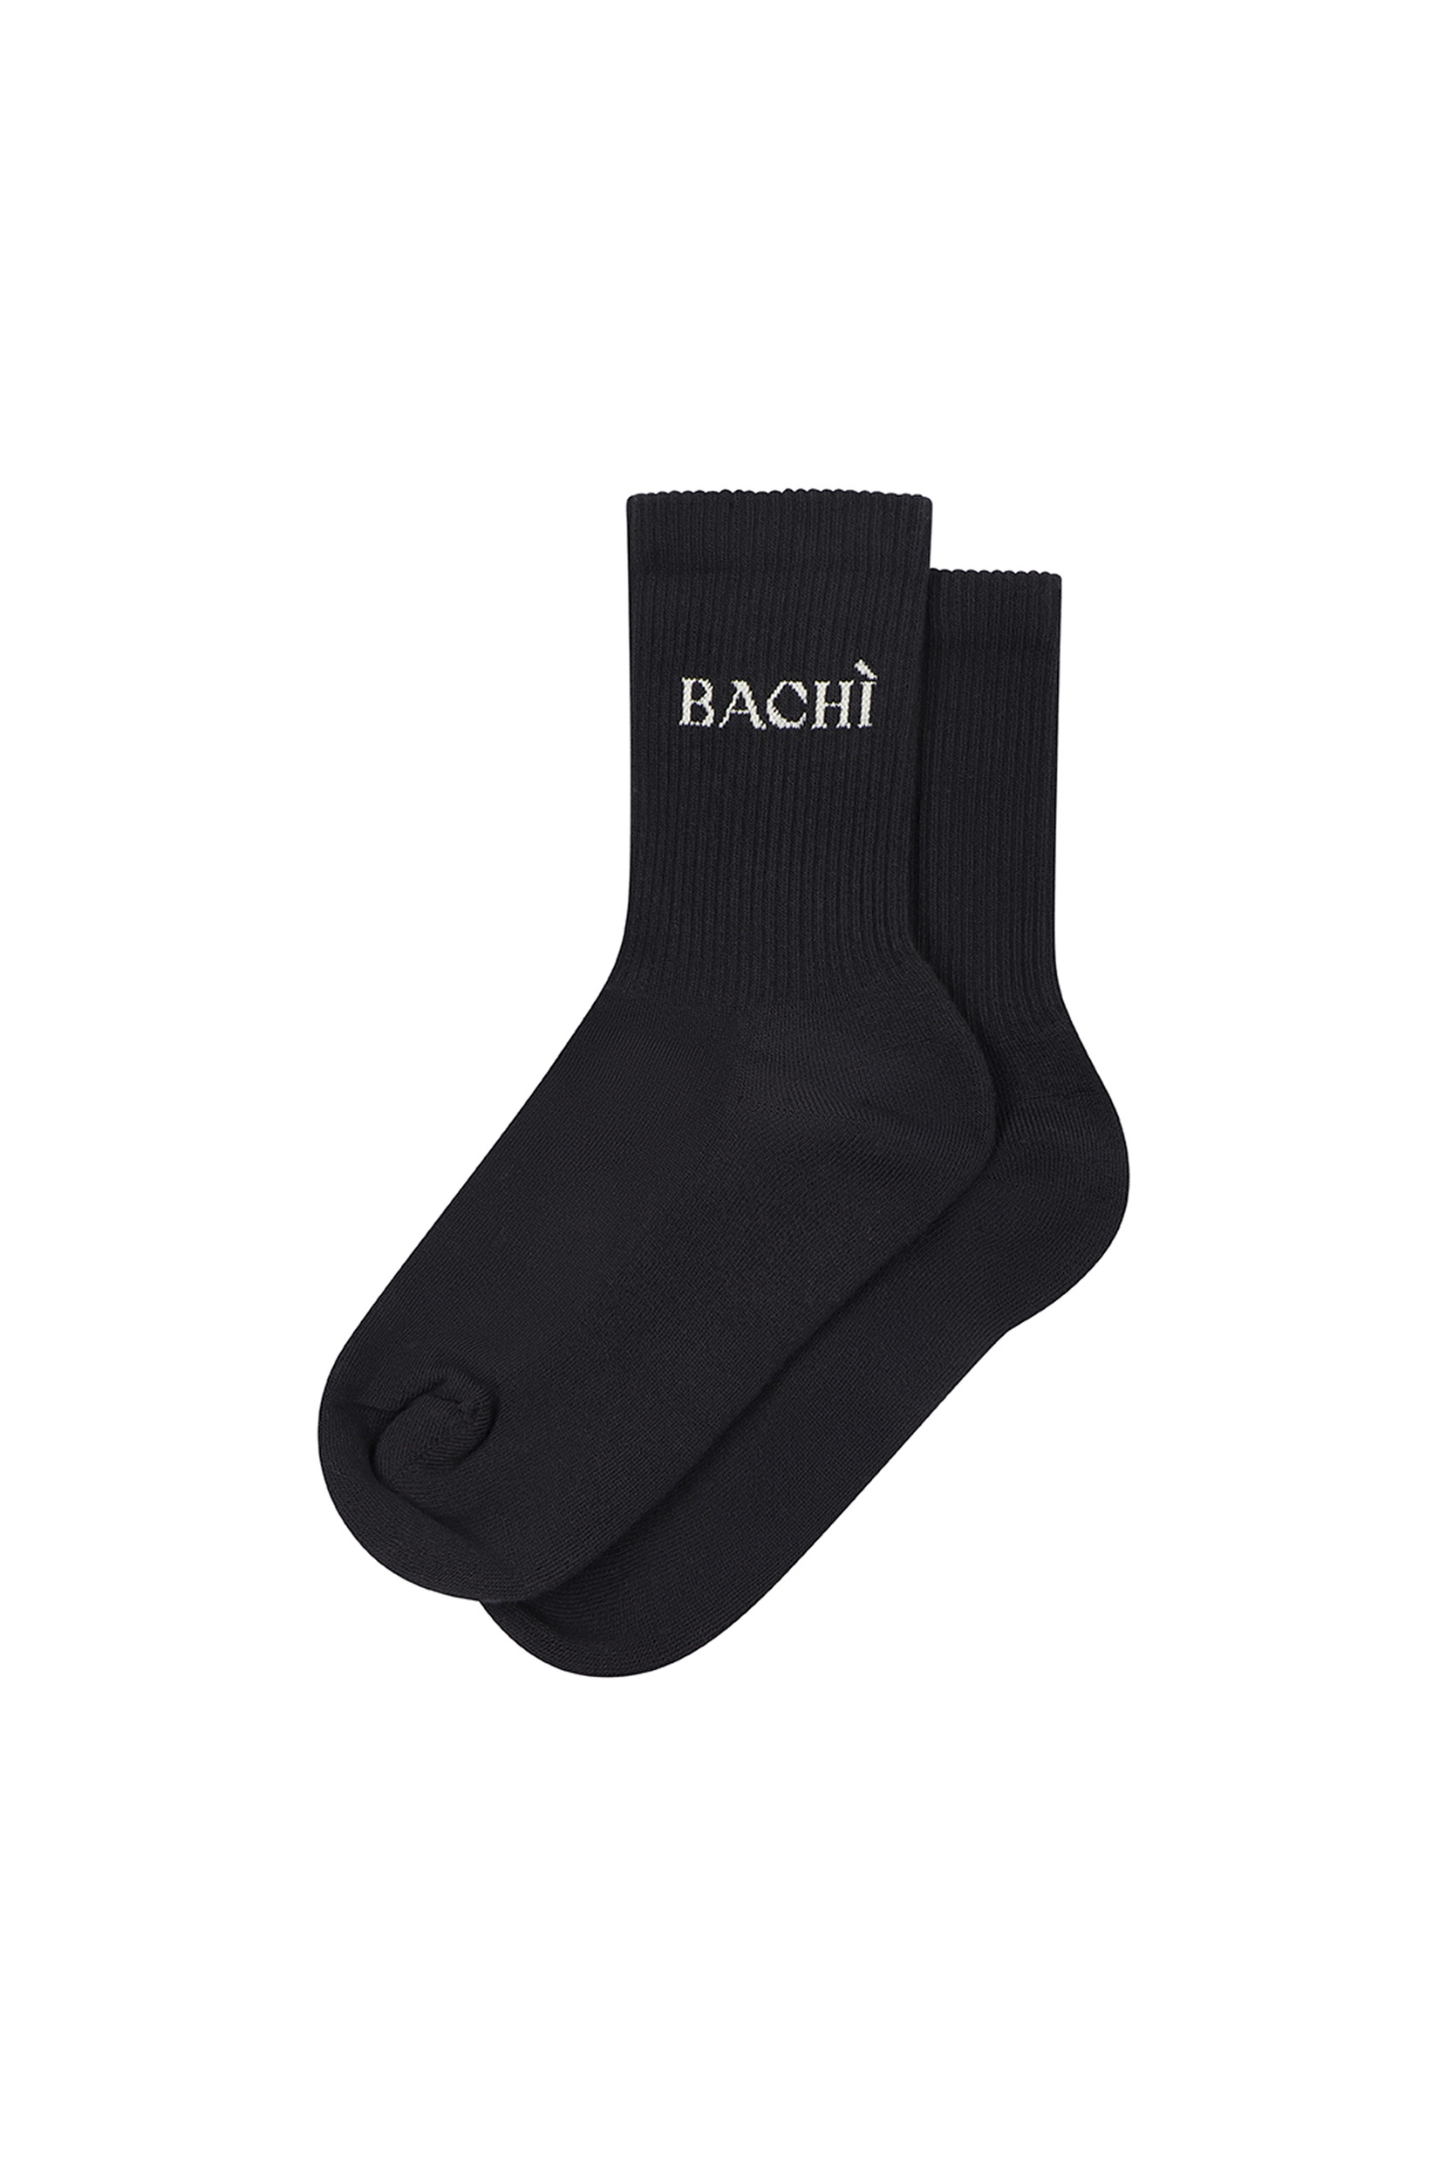 B Socks - Black